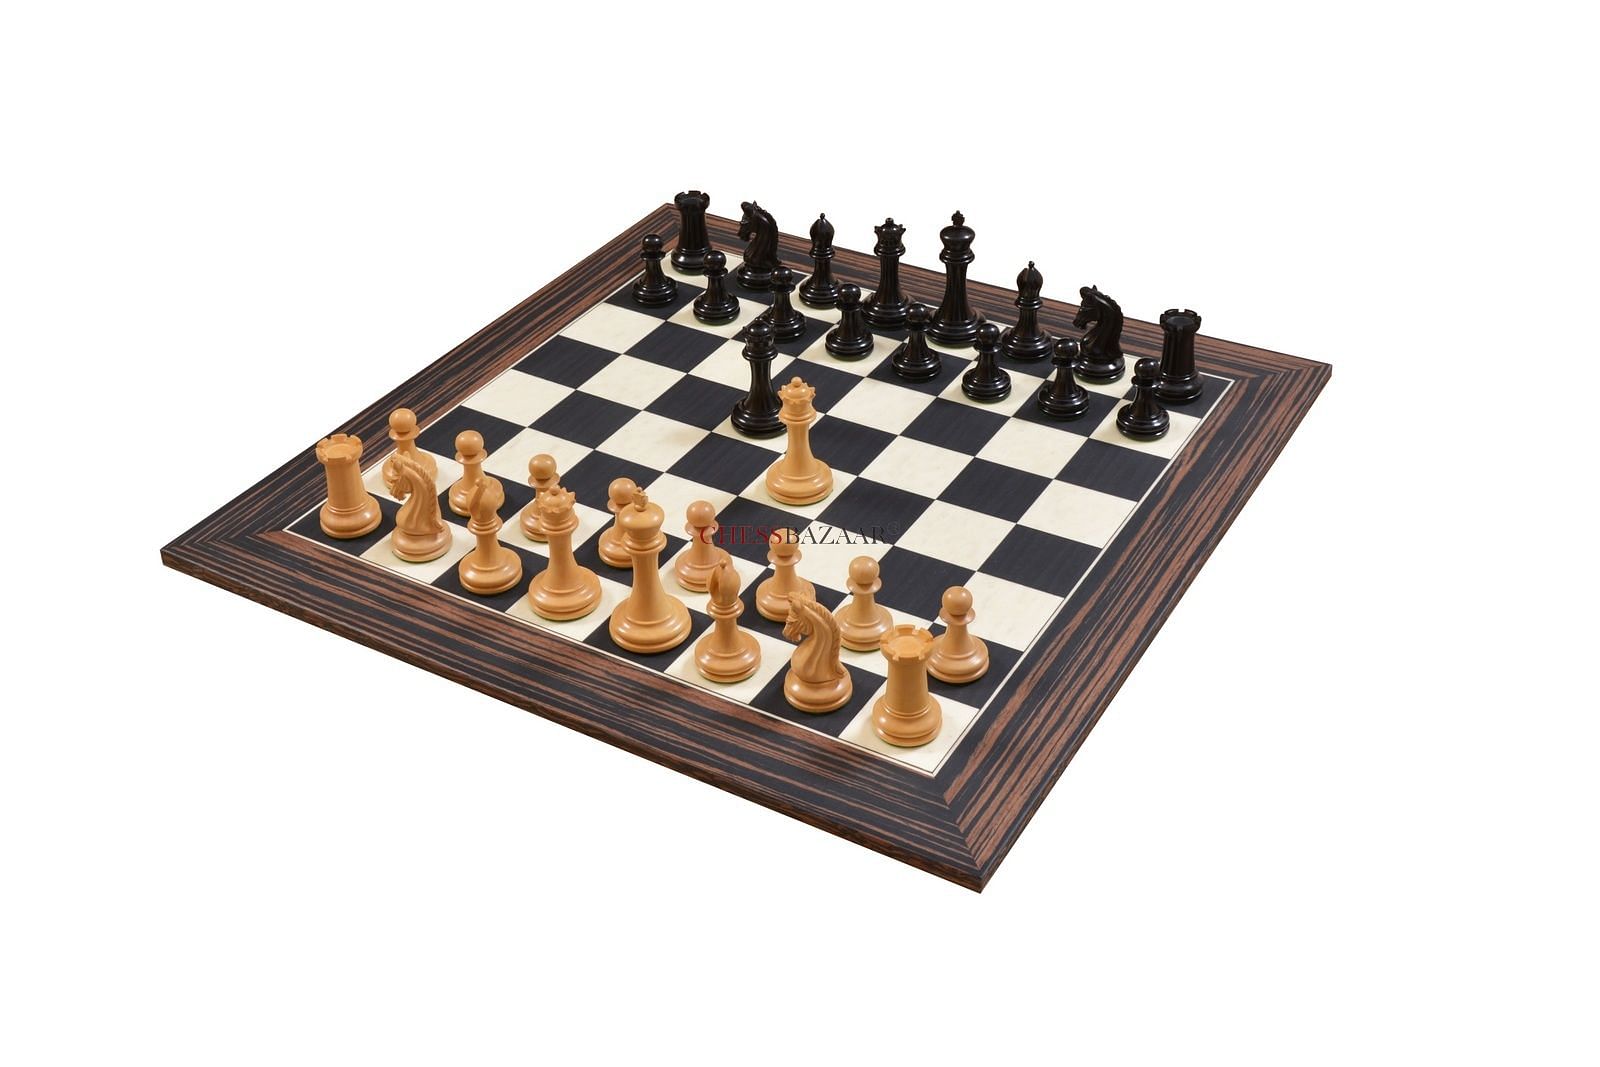 I saw this chess set in Pawn Sacrifice : r/chess